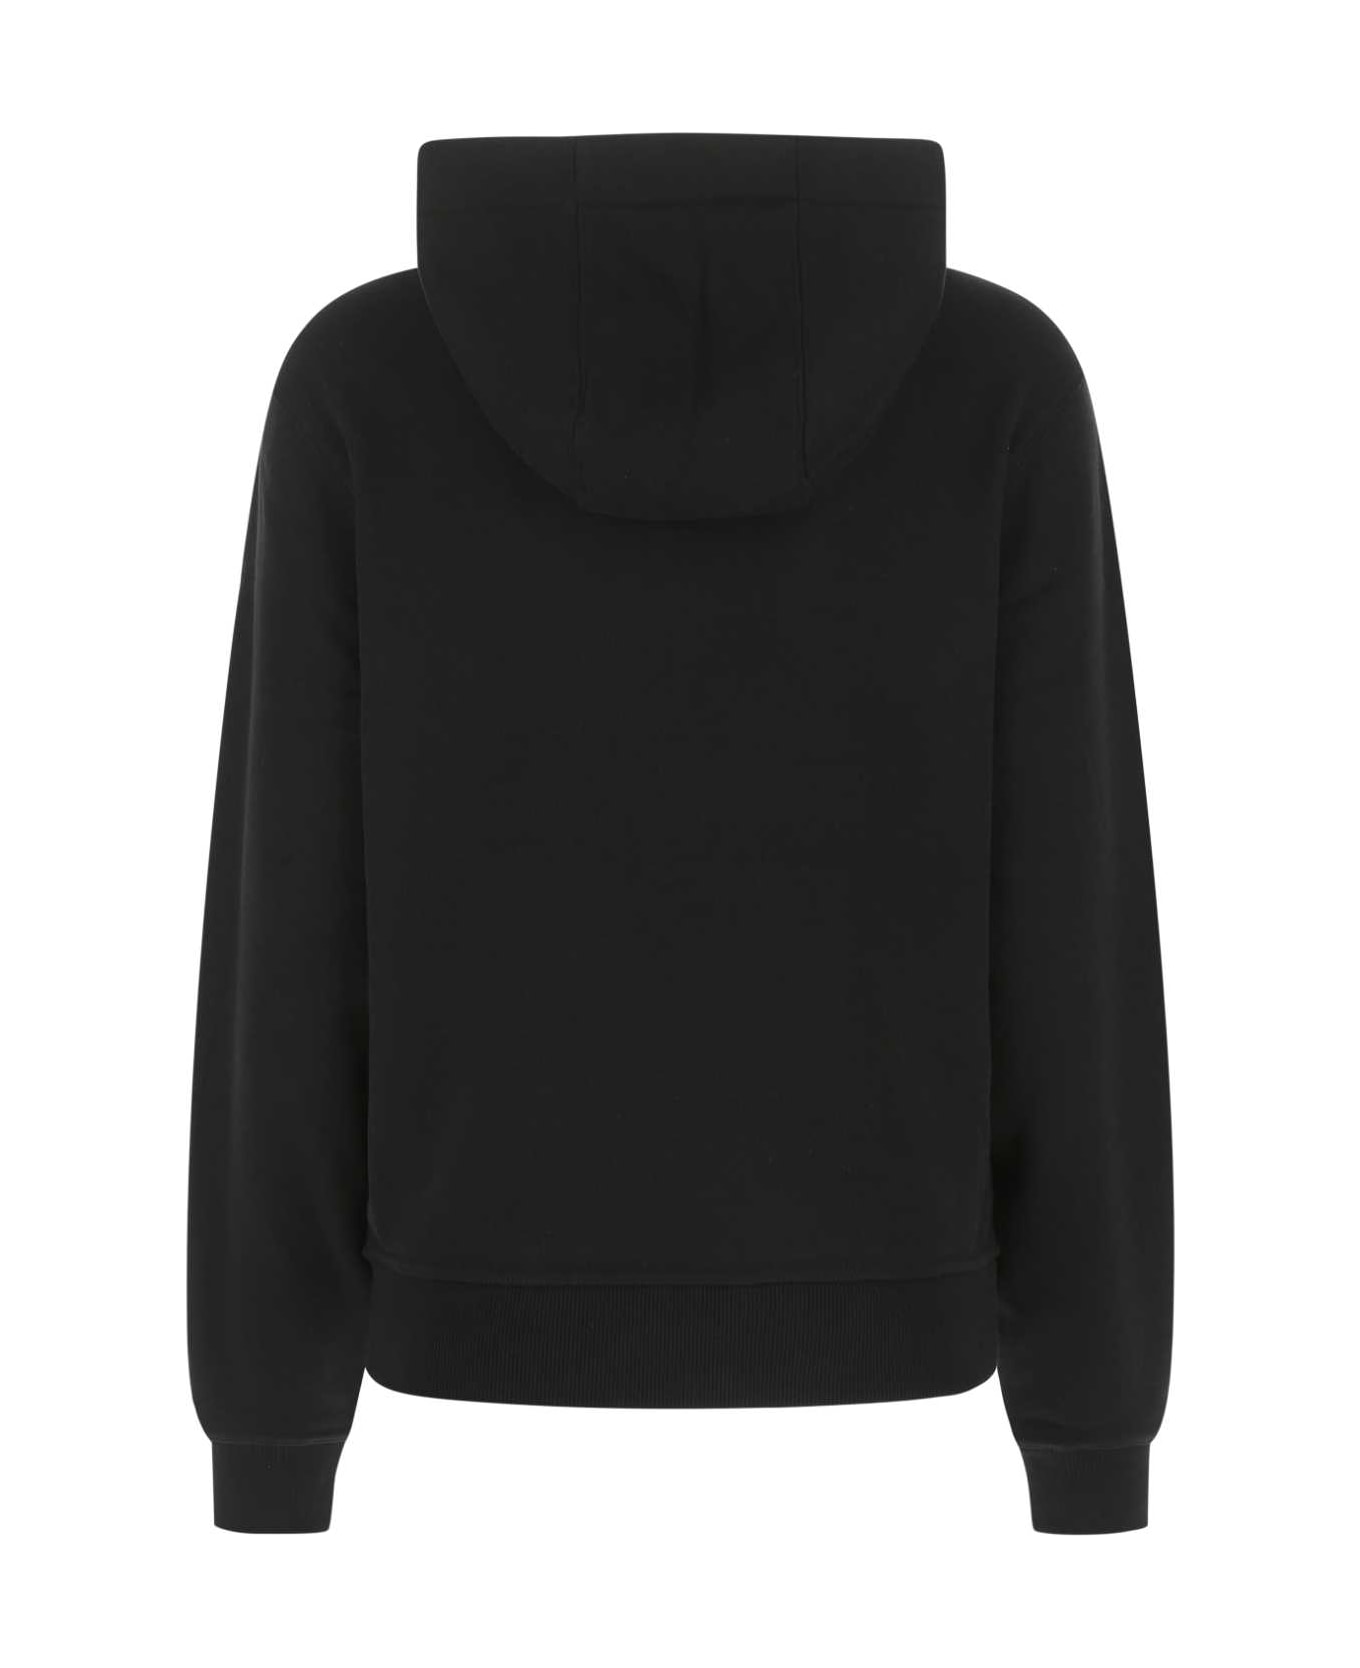 Burberry Black Cotton Oversize Sweatshirt - A1189